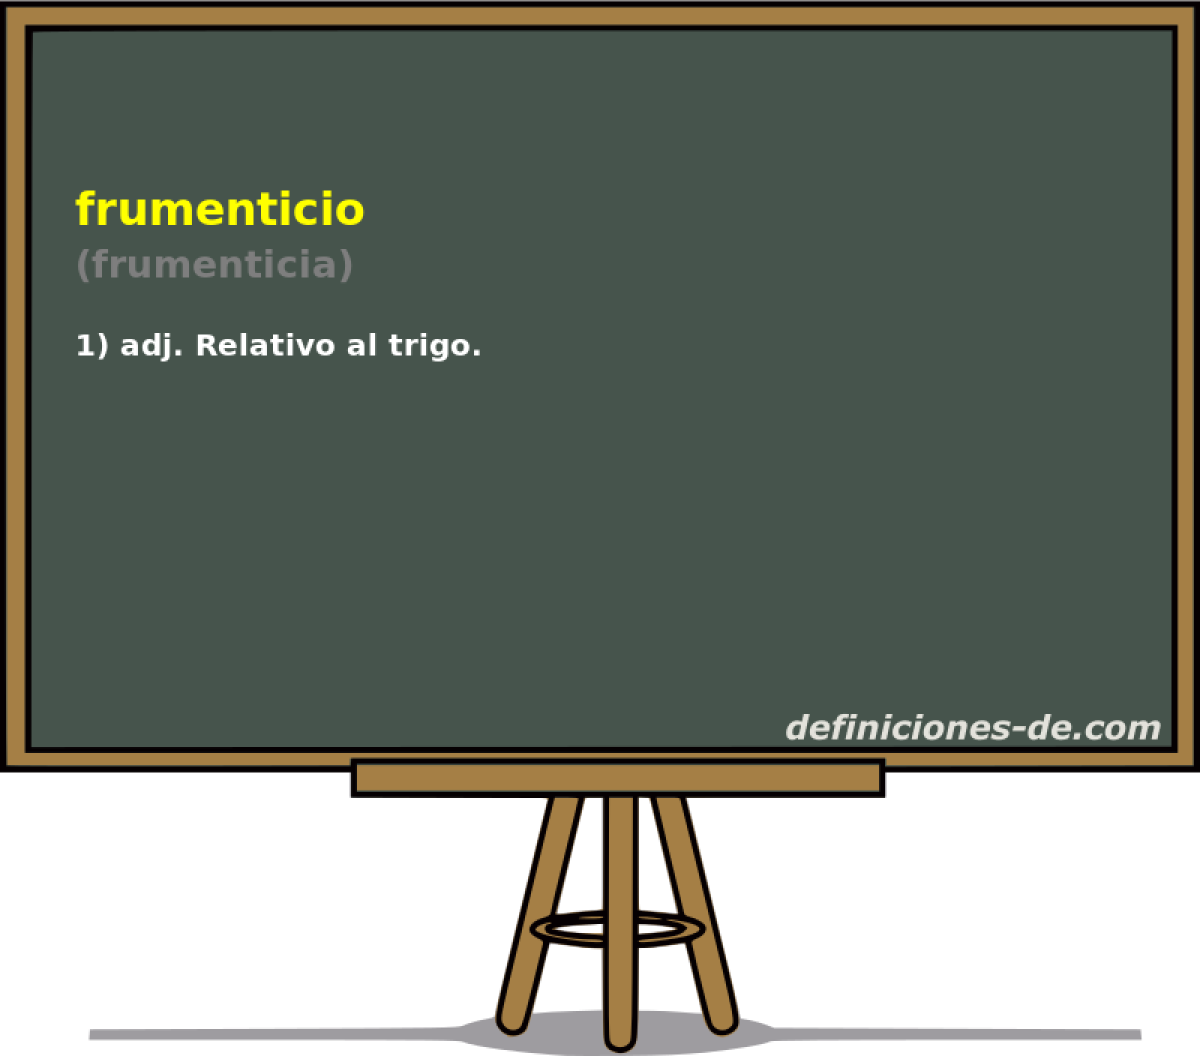 frumenticio (frumenticia)